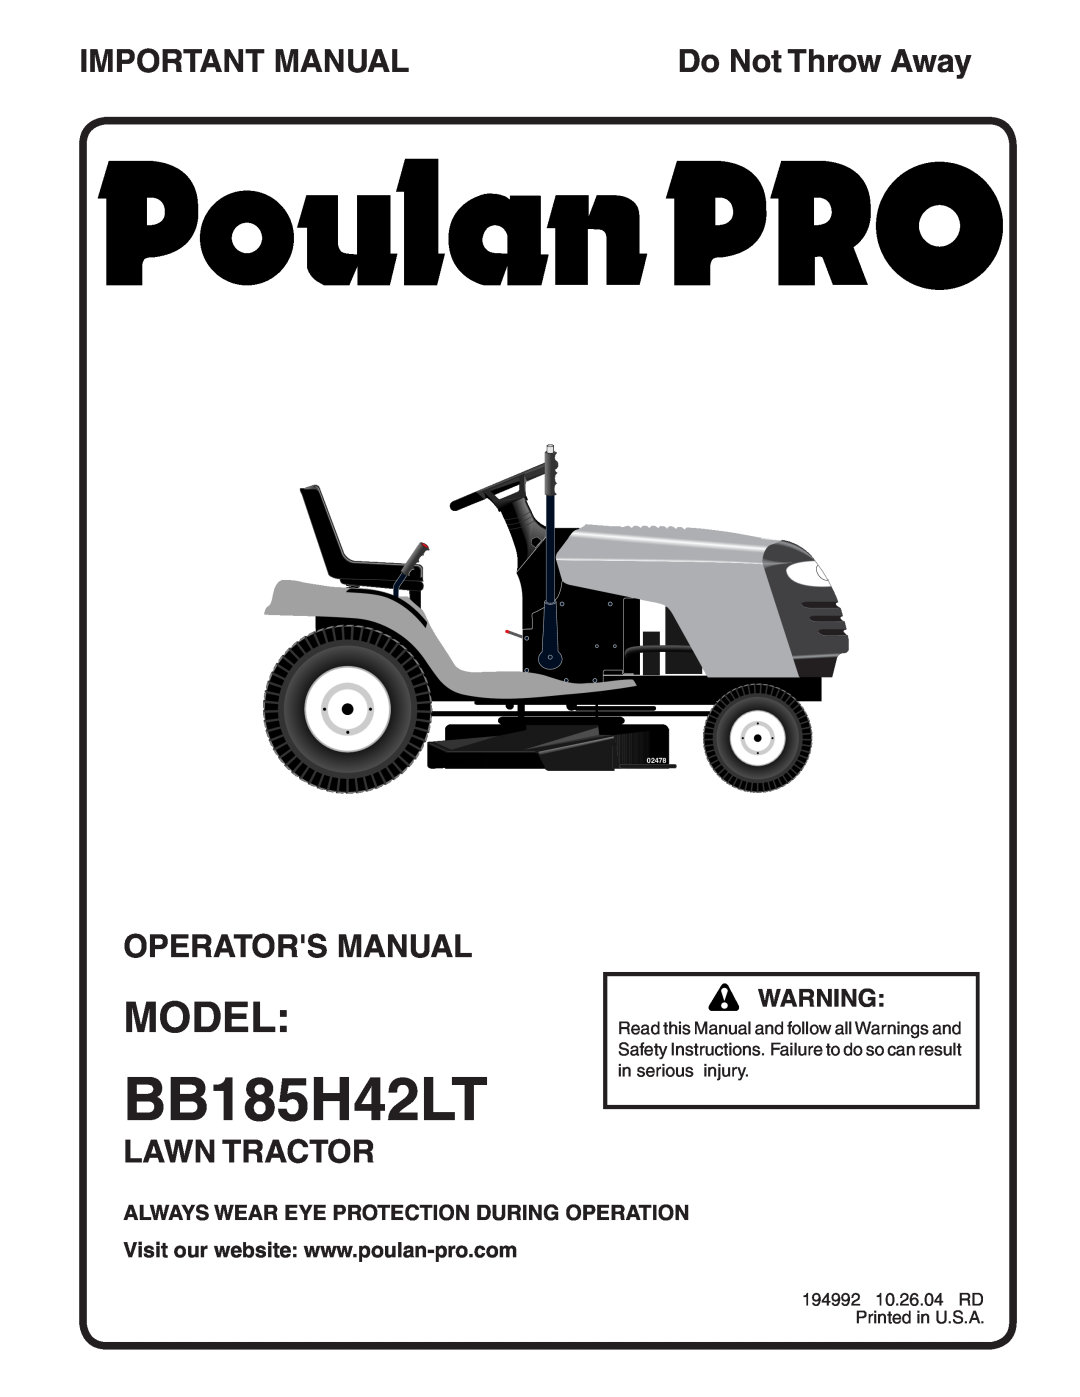 Poulan BB185H42LT manual Model, Important Manual, Operators Manual, Lawn Tractor, Do Not Throw Away, 02478 